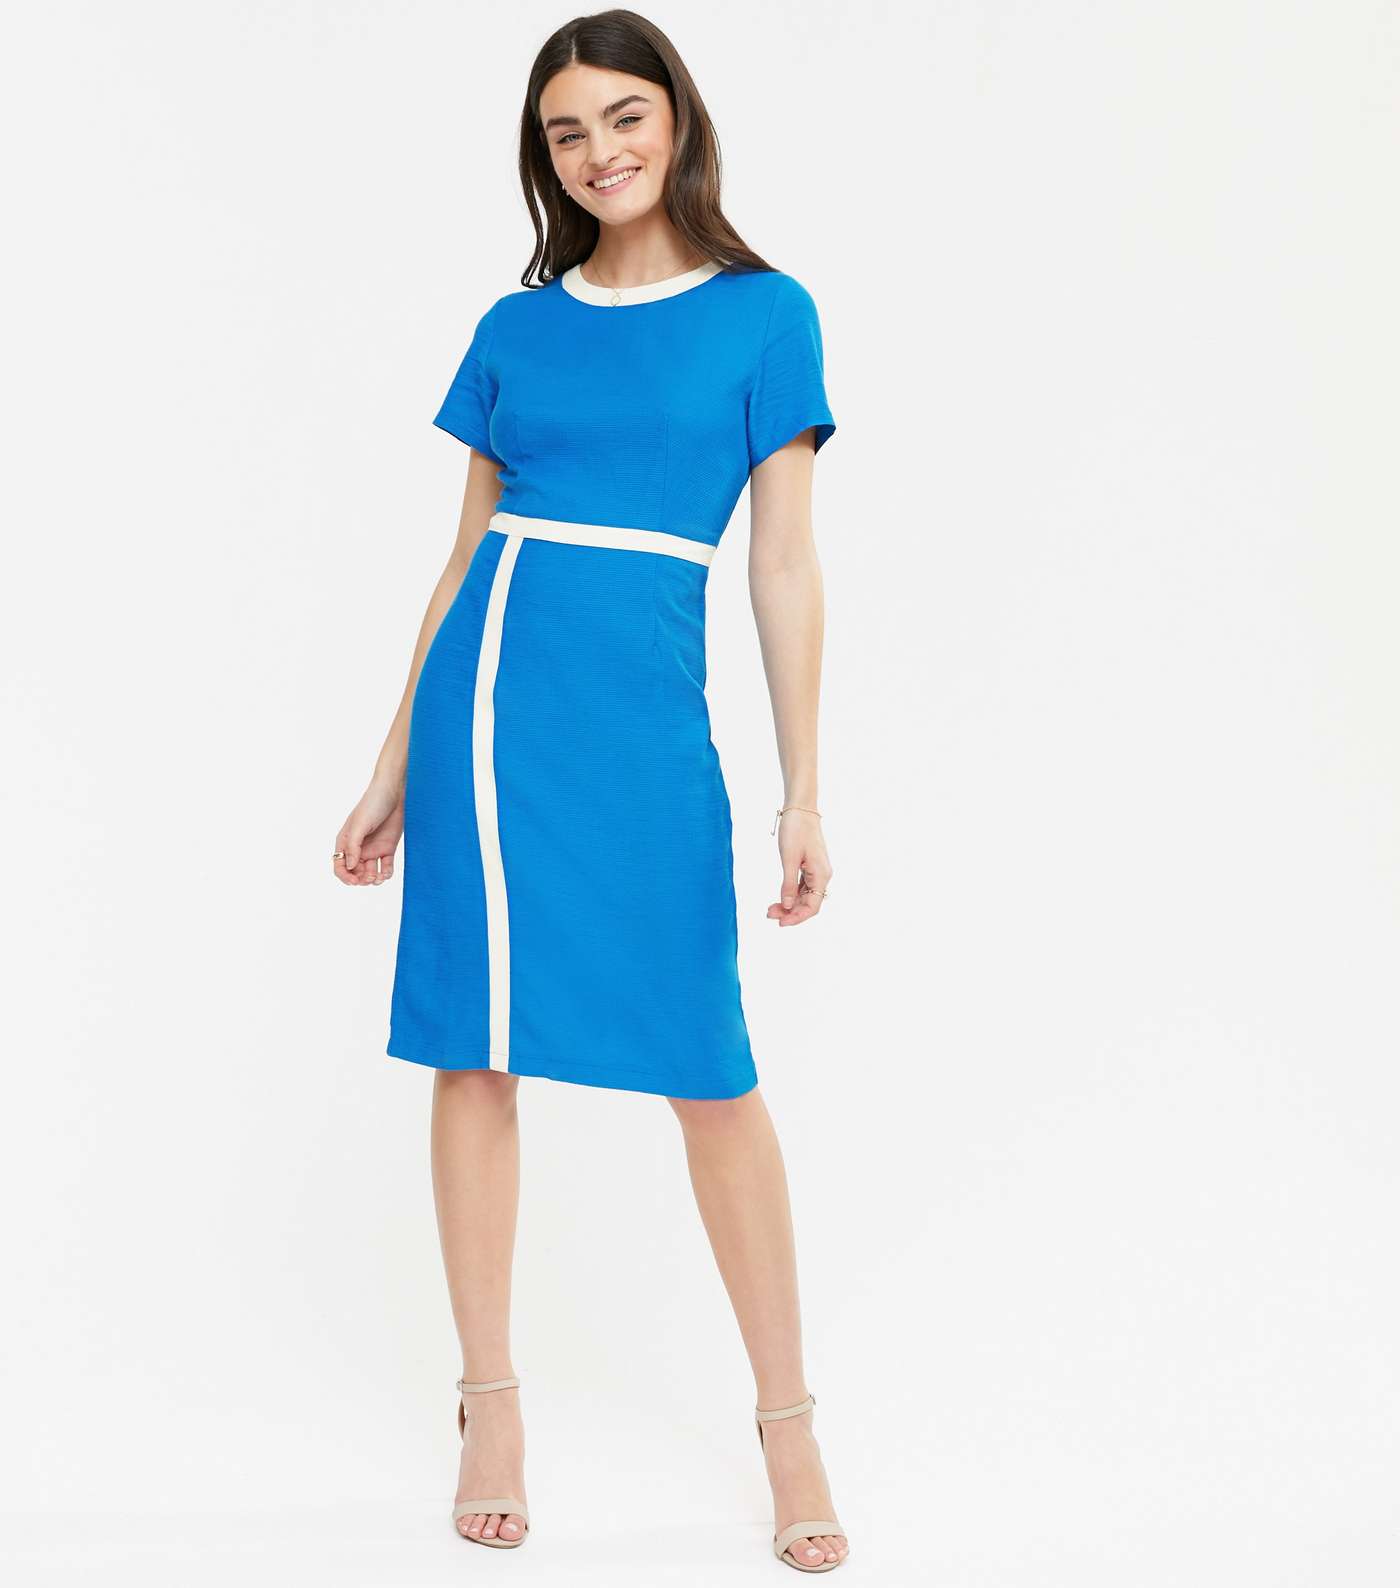 Yumi Bright Blue Textured Bodycon Dress Image 2